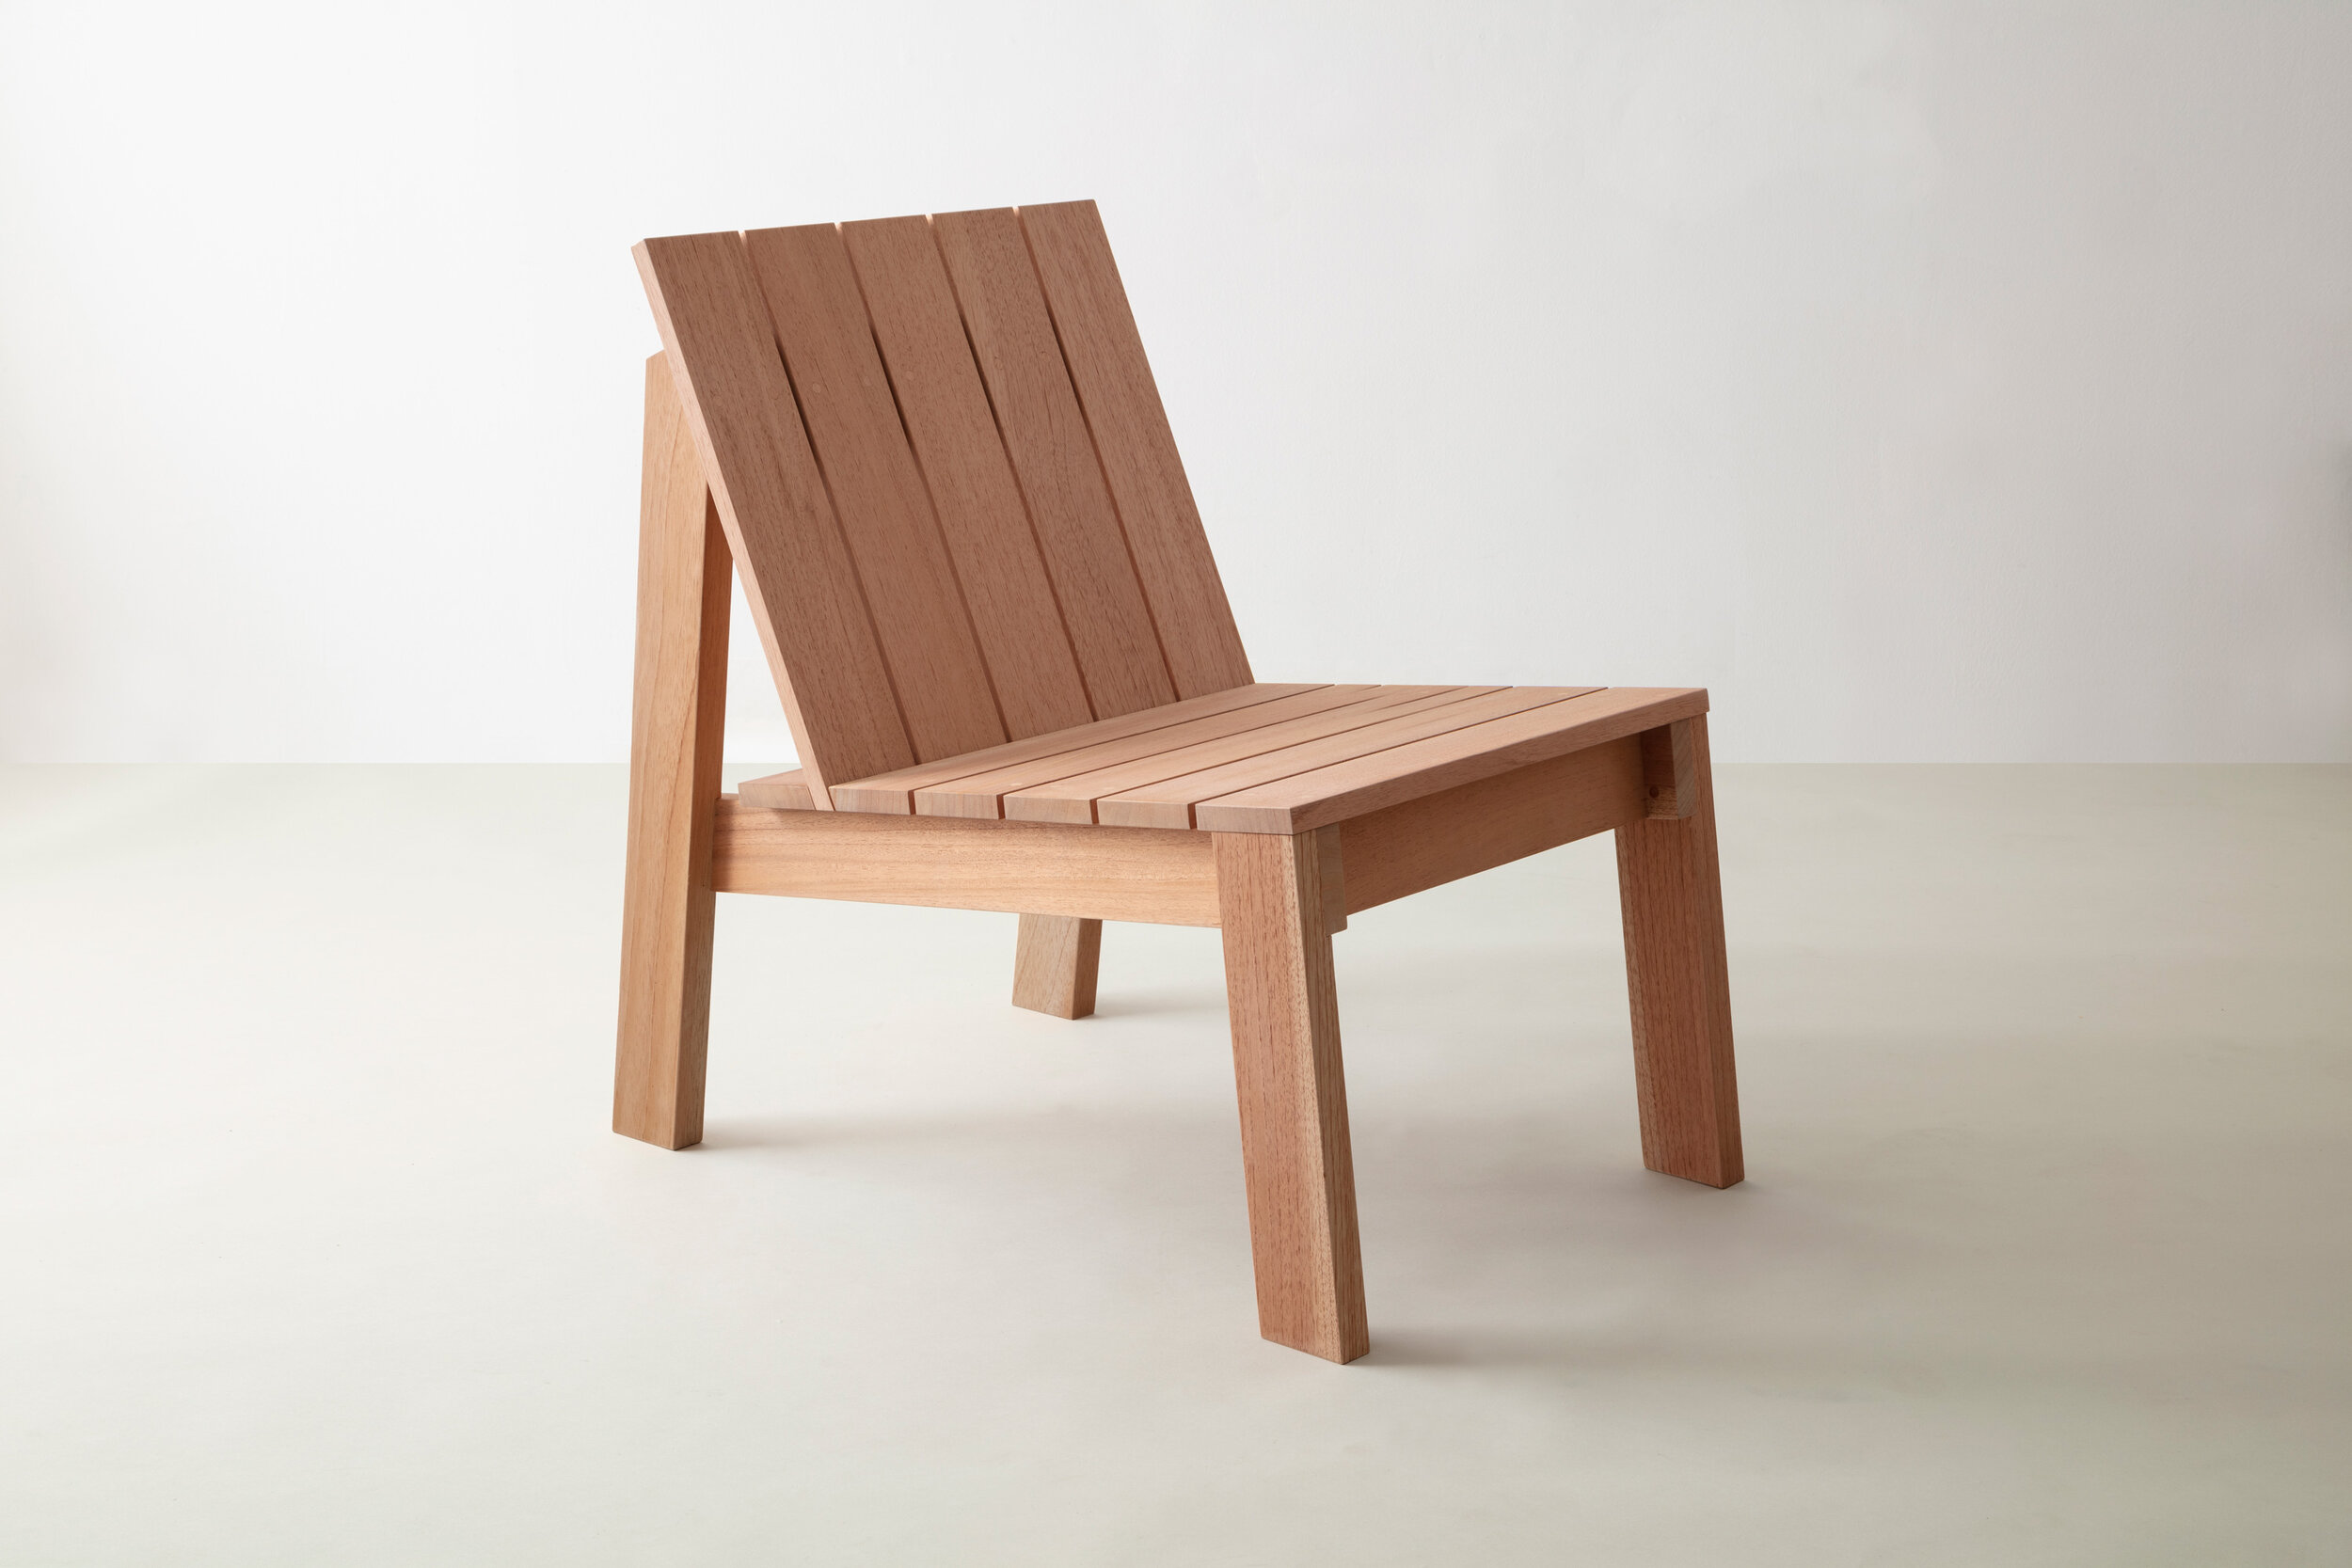 Little Wood Chair by David Gaynor Design